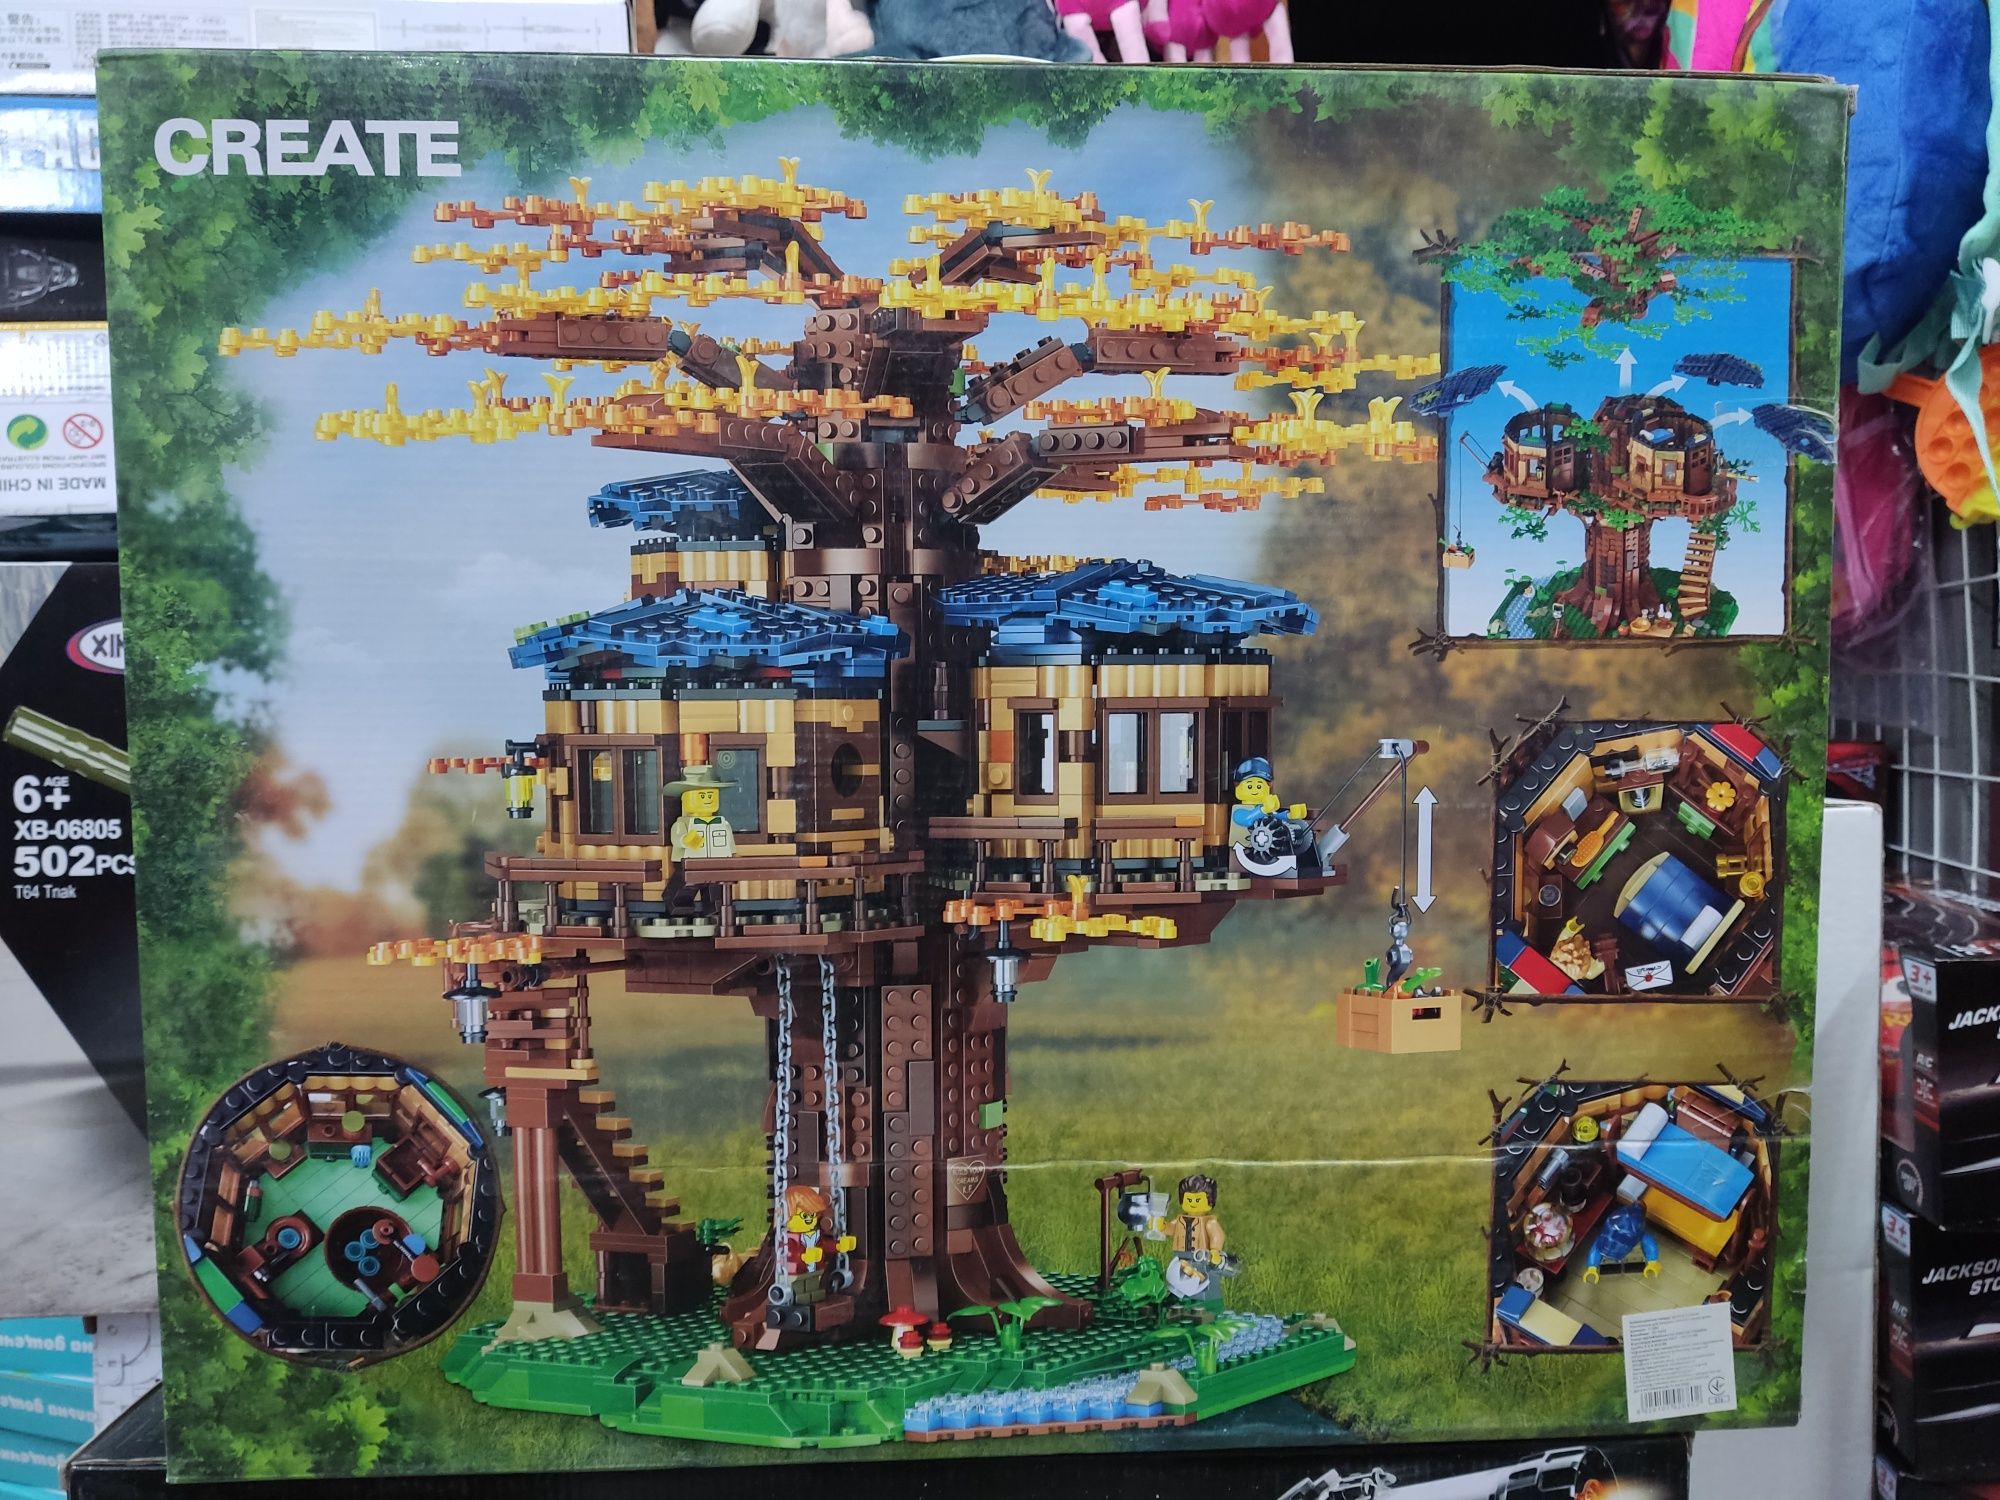 Конструктор Lari 11364 Дом на дереве Майнкрафт Minecraft